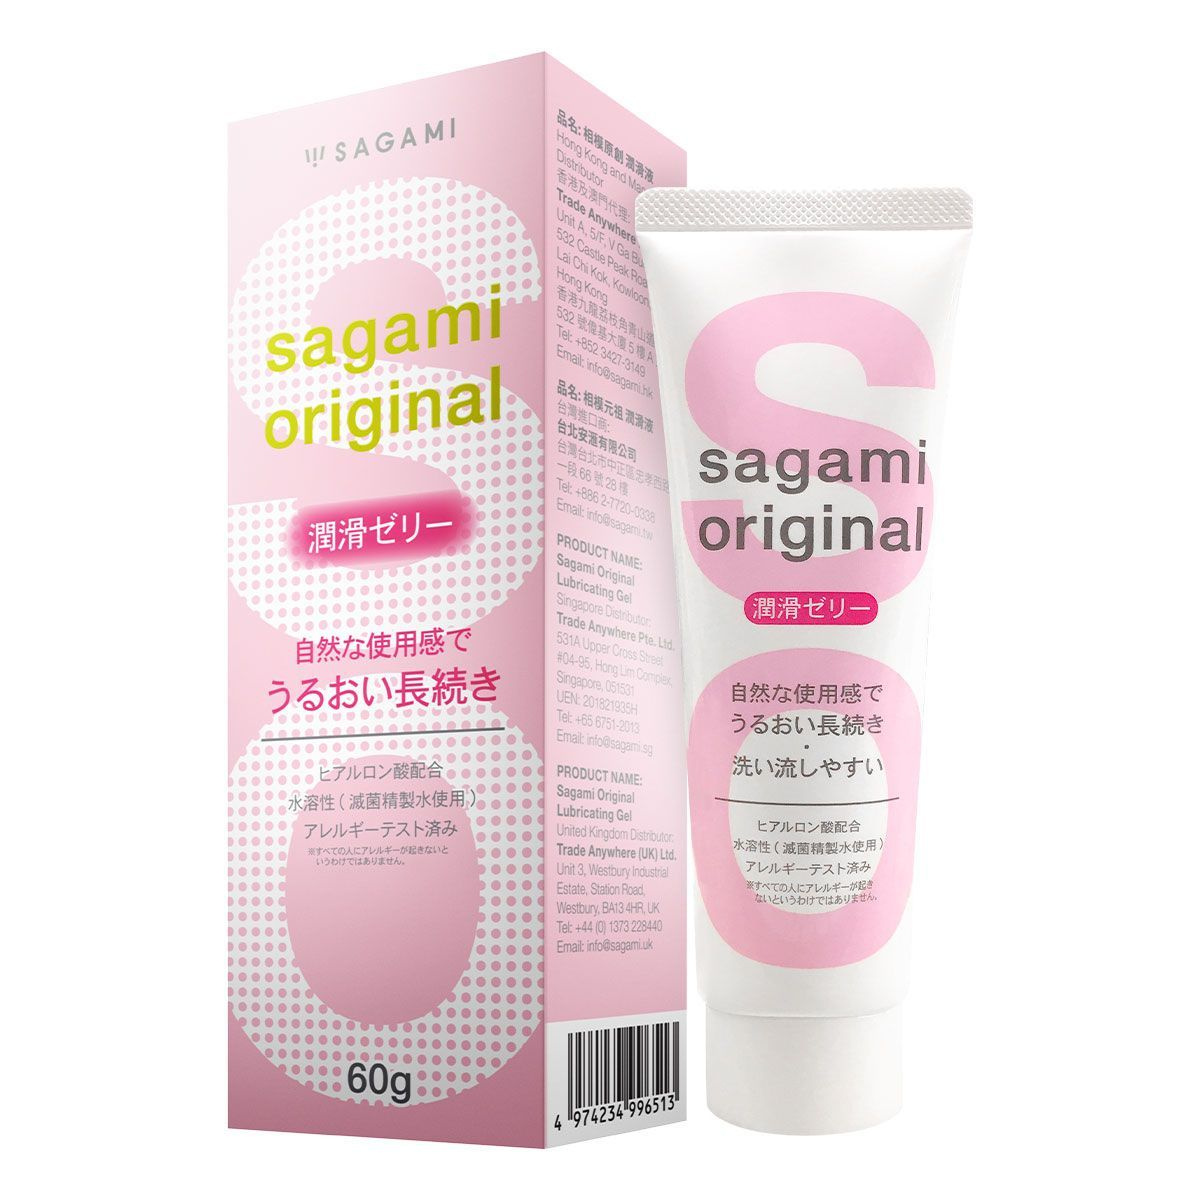 Sagami Original Gel 60gr.